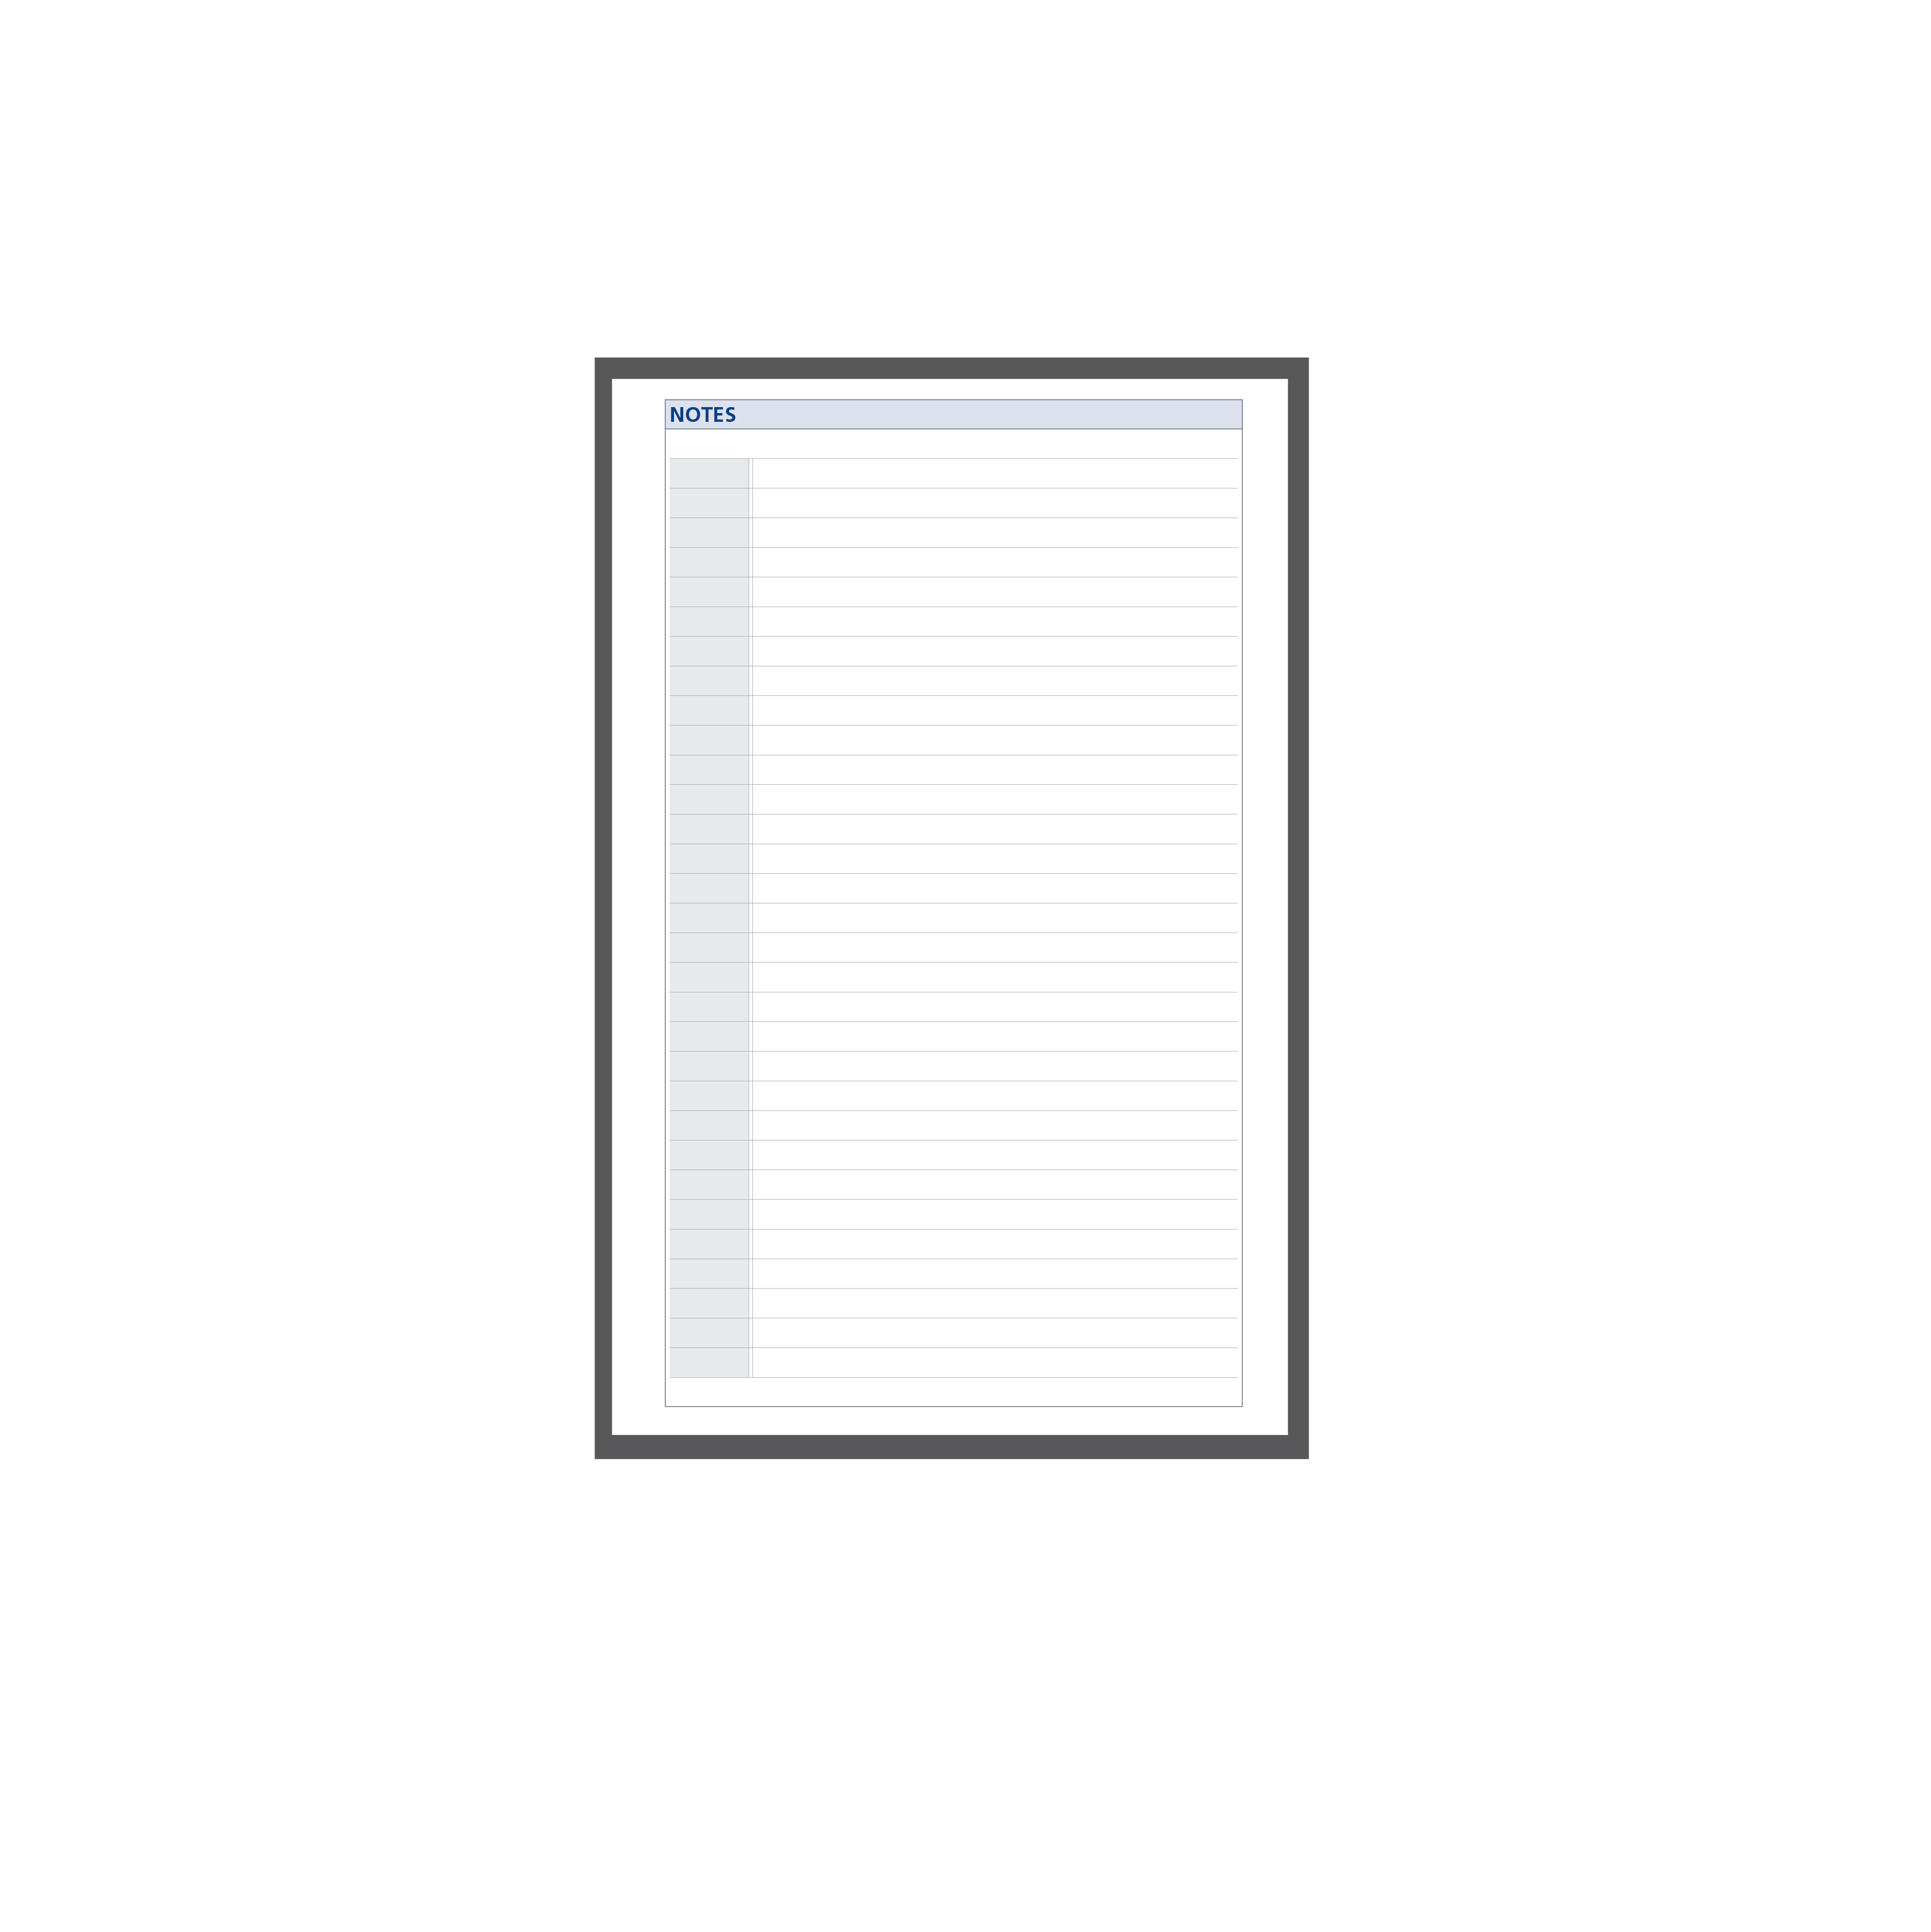 DayPlanner - Desk Size - Notes Default Title